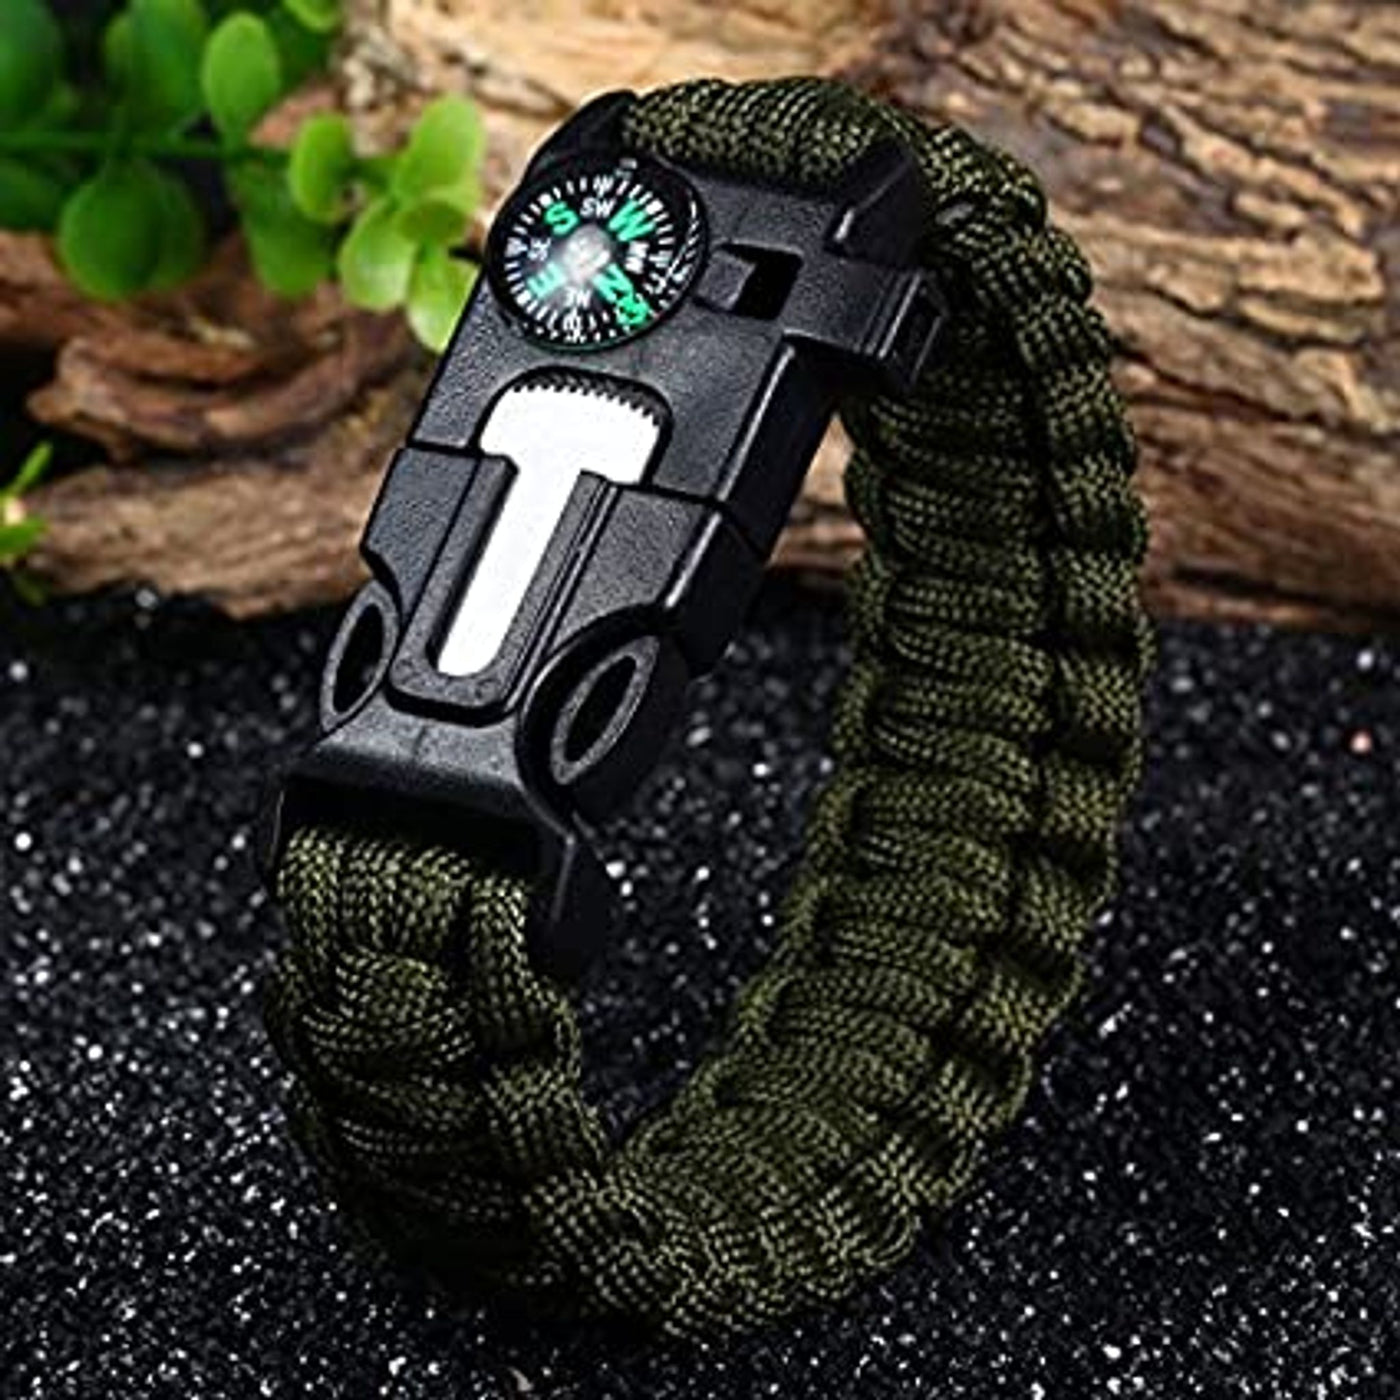 5-in-1 Paracord Survival Bracelet | Survival Gear Camo